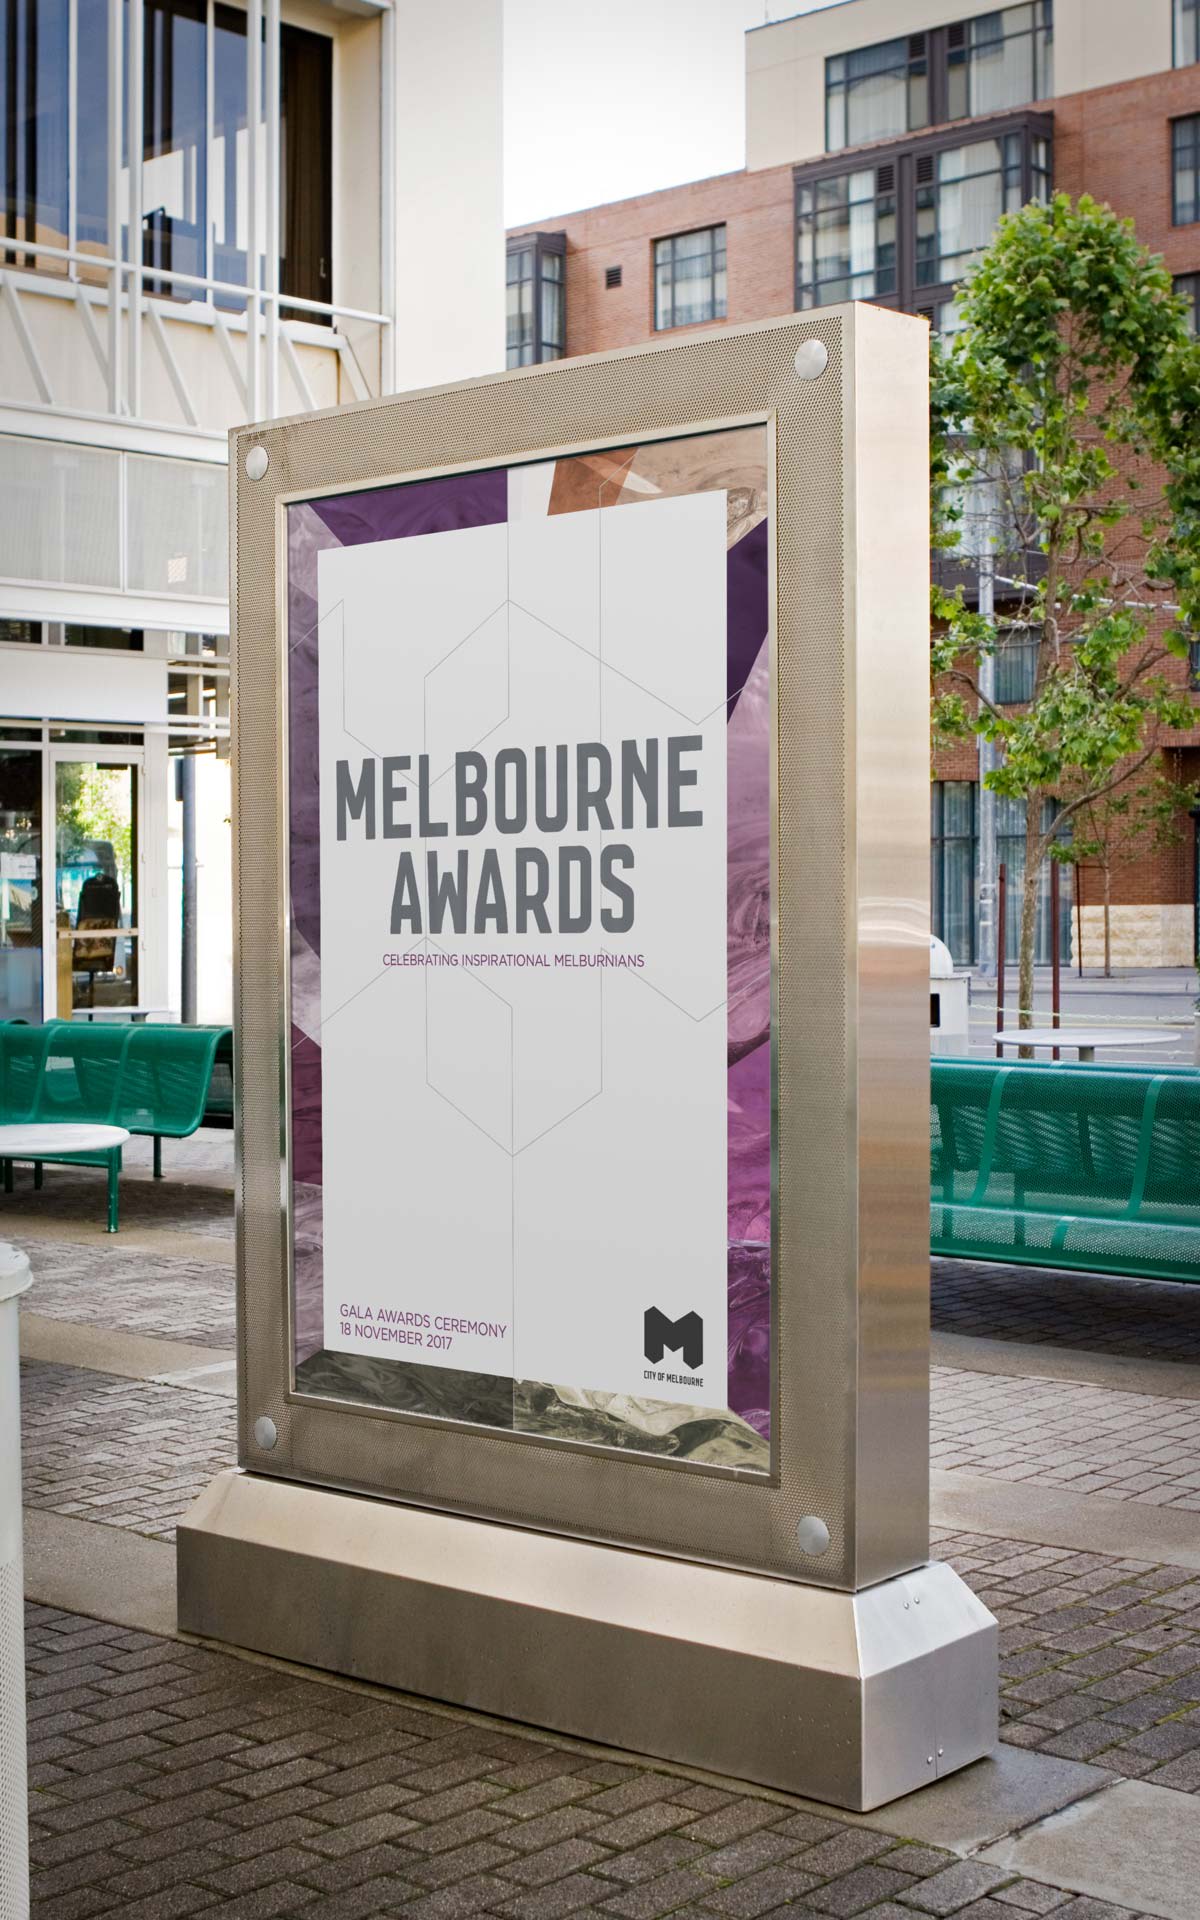 City of Melbourne 2017 Melbourne Awards